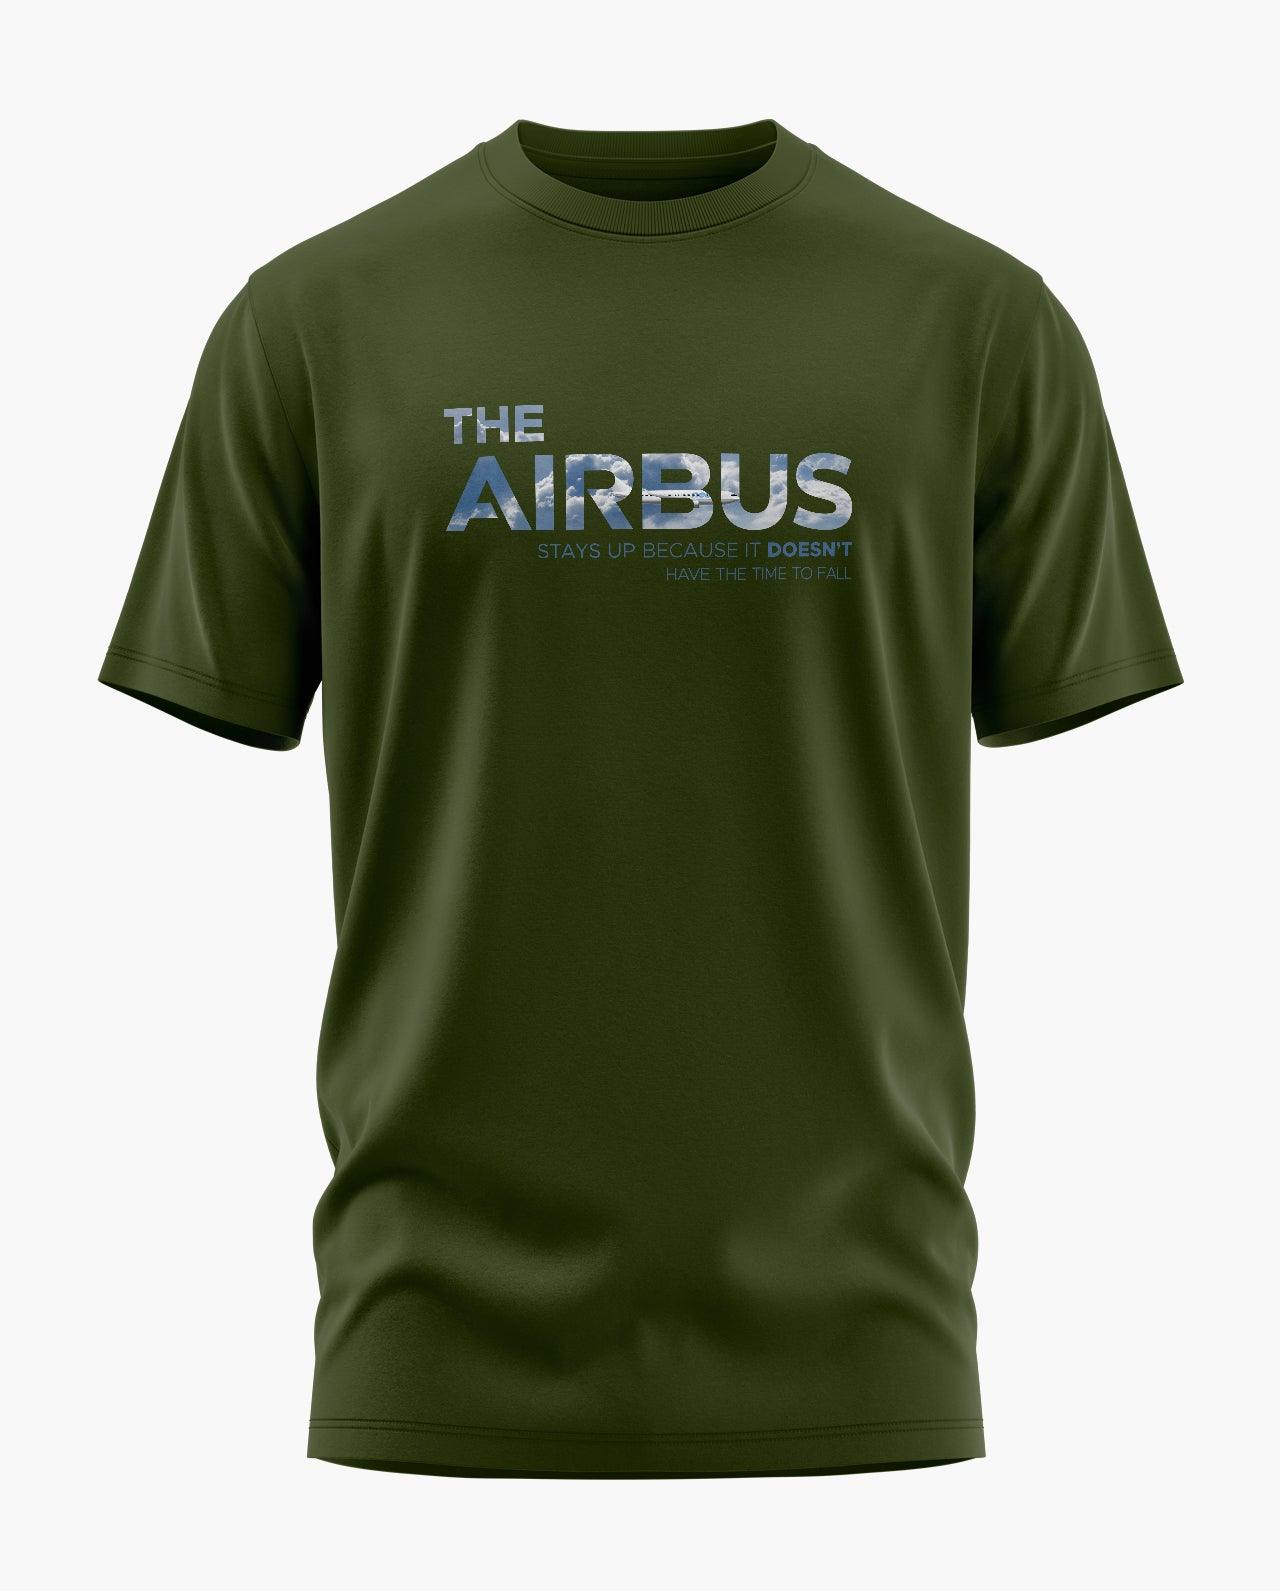 Airbus Never Fails T-Shirt - Aero Armour